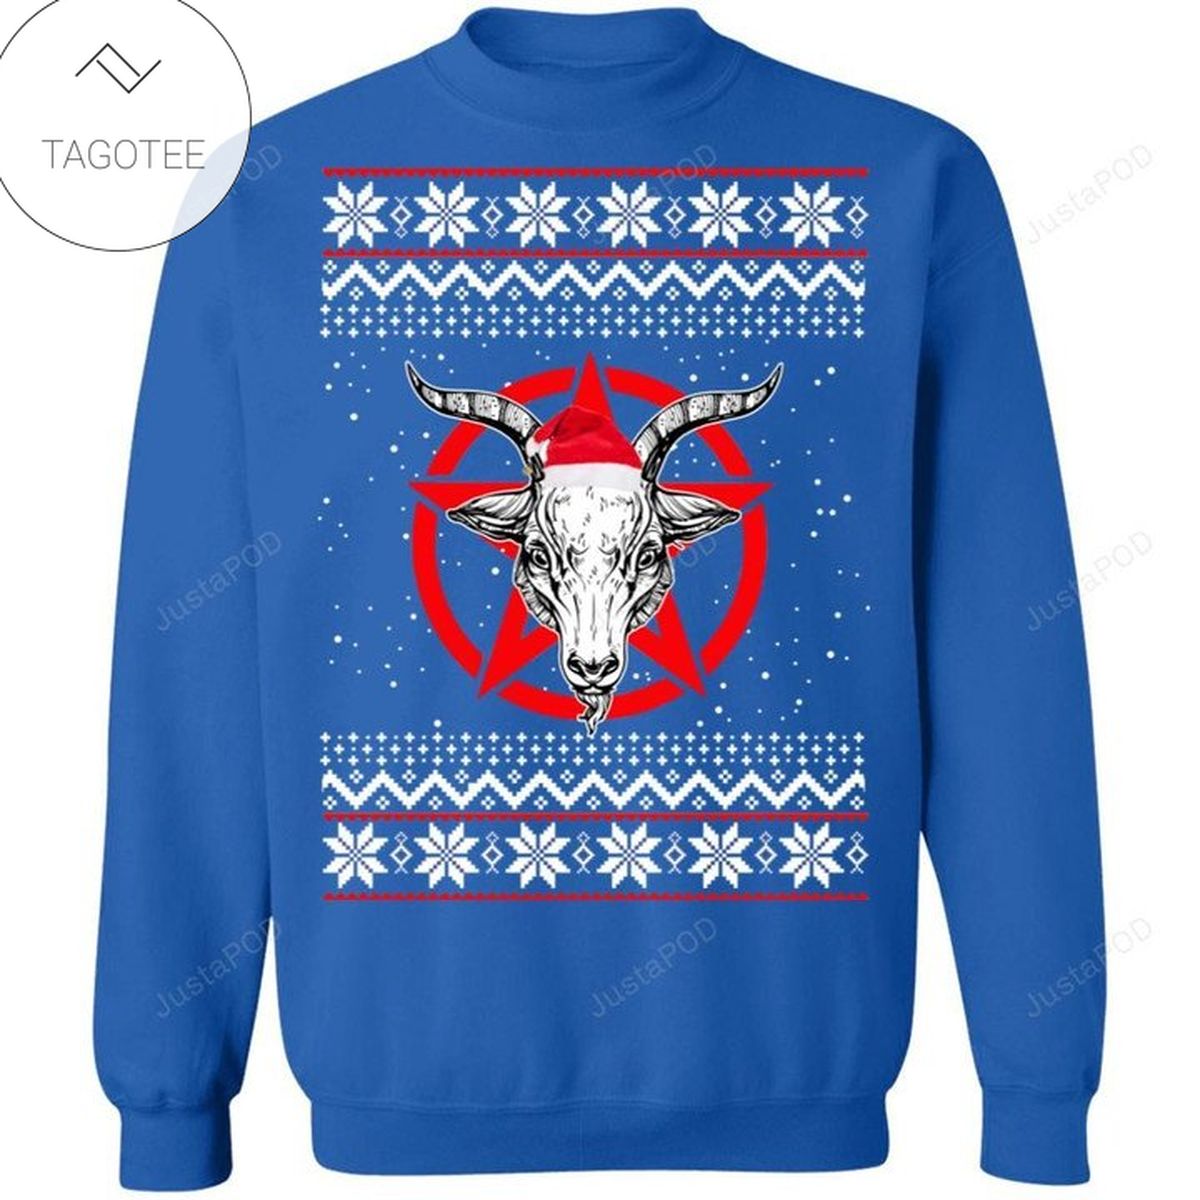 Satanic Pentagram Ugly Christmas Sweater